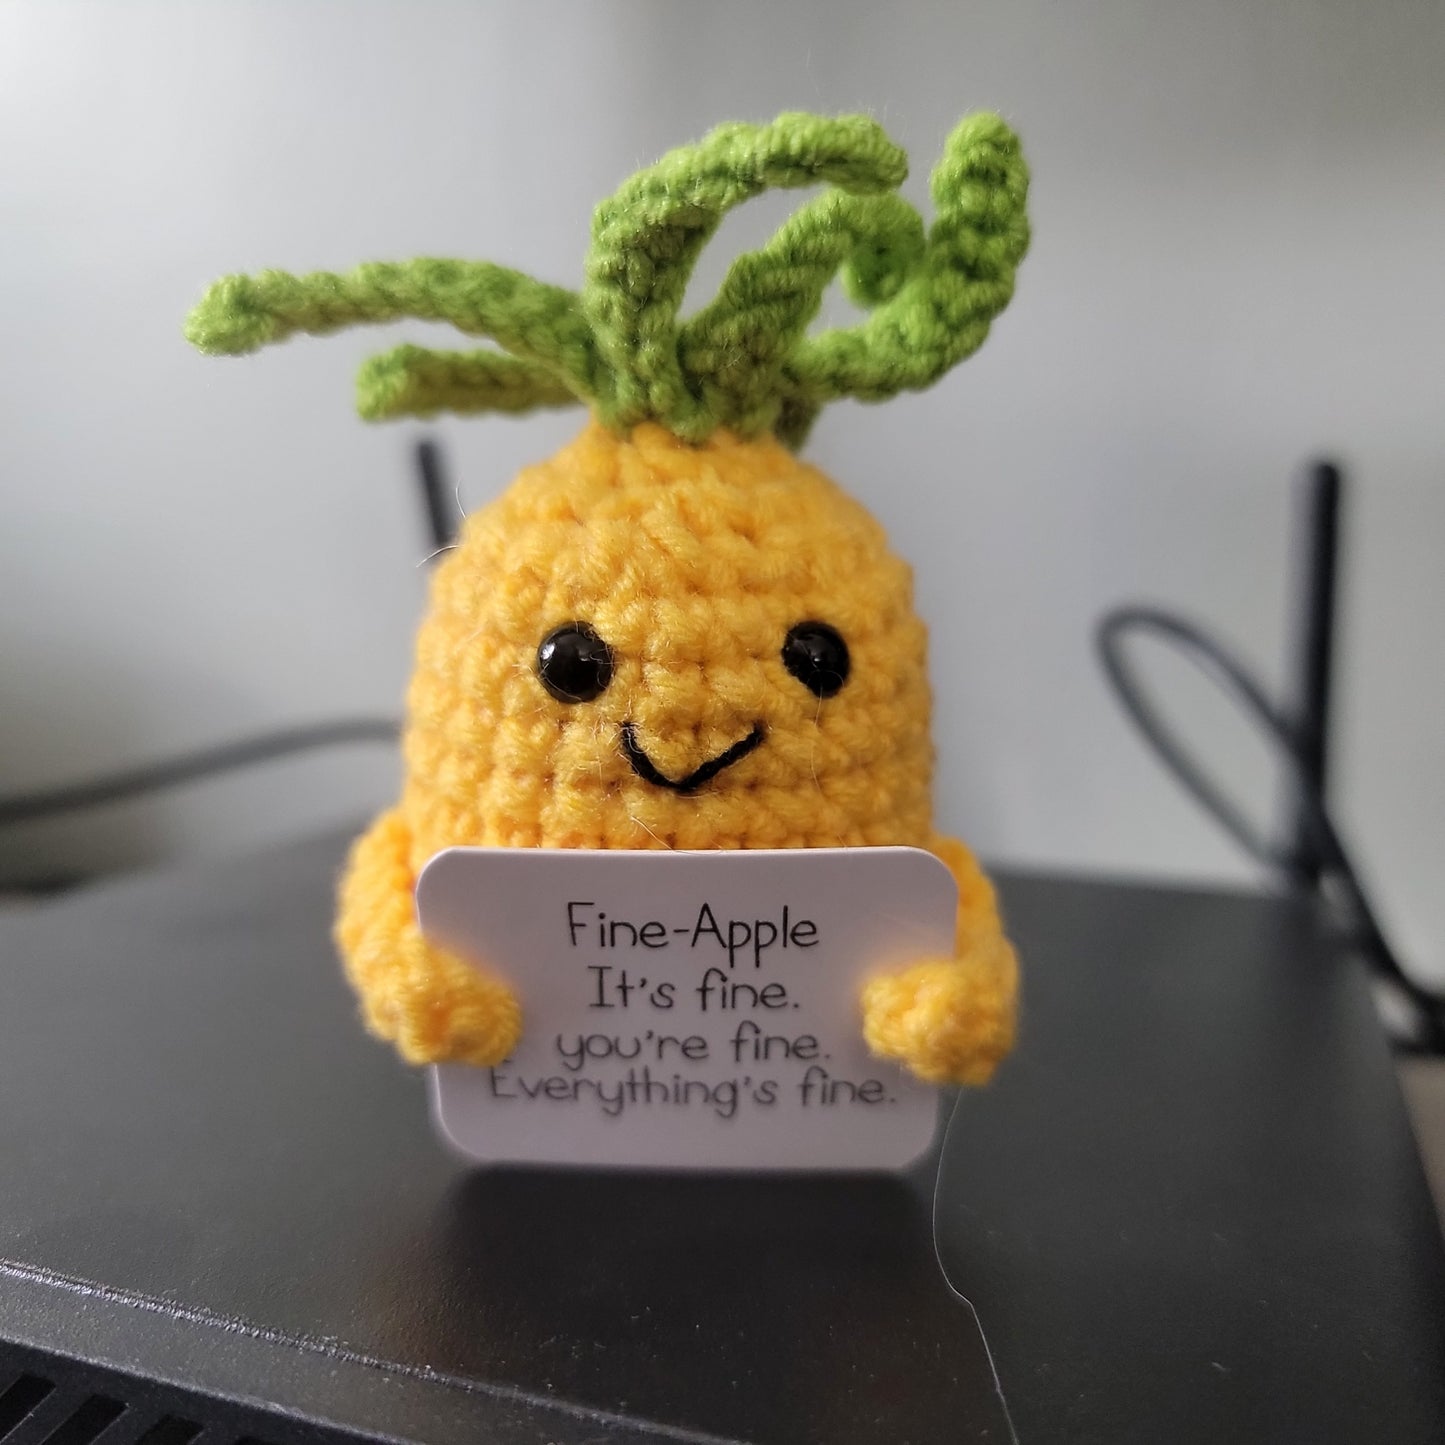 "Fine-Apple" Crocheted Character